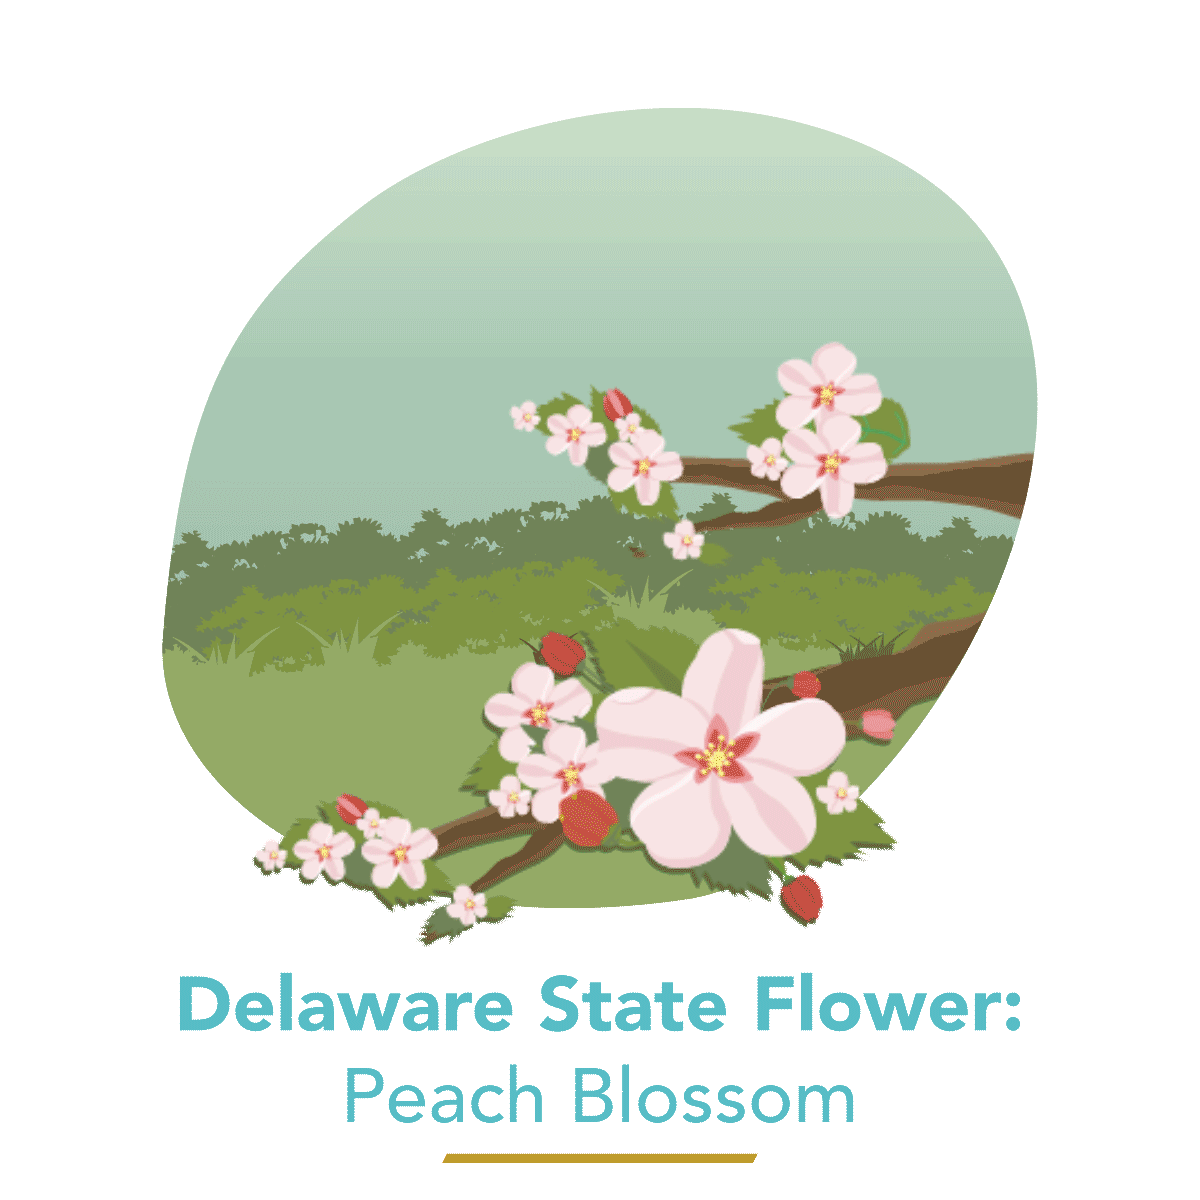 State Flower - Peach Blossom